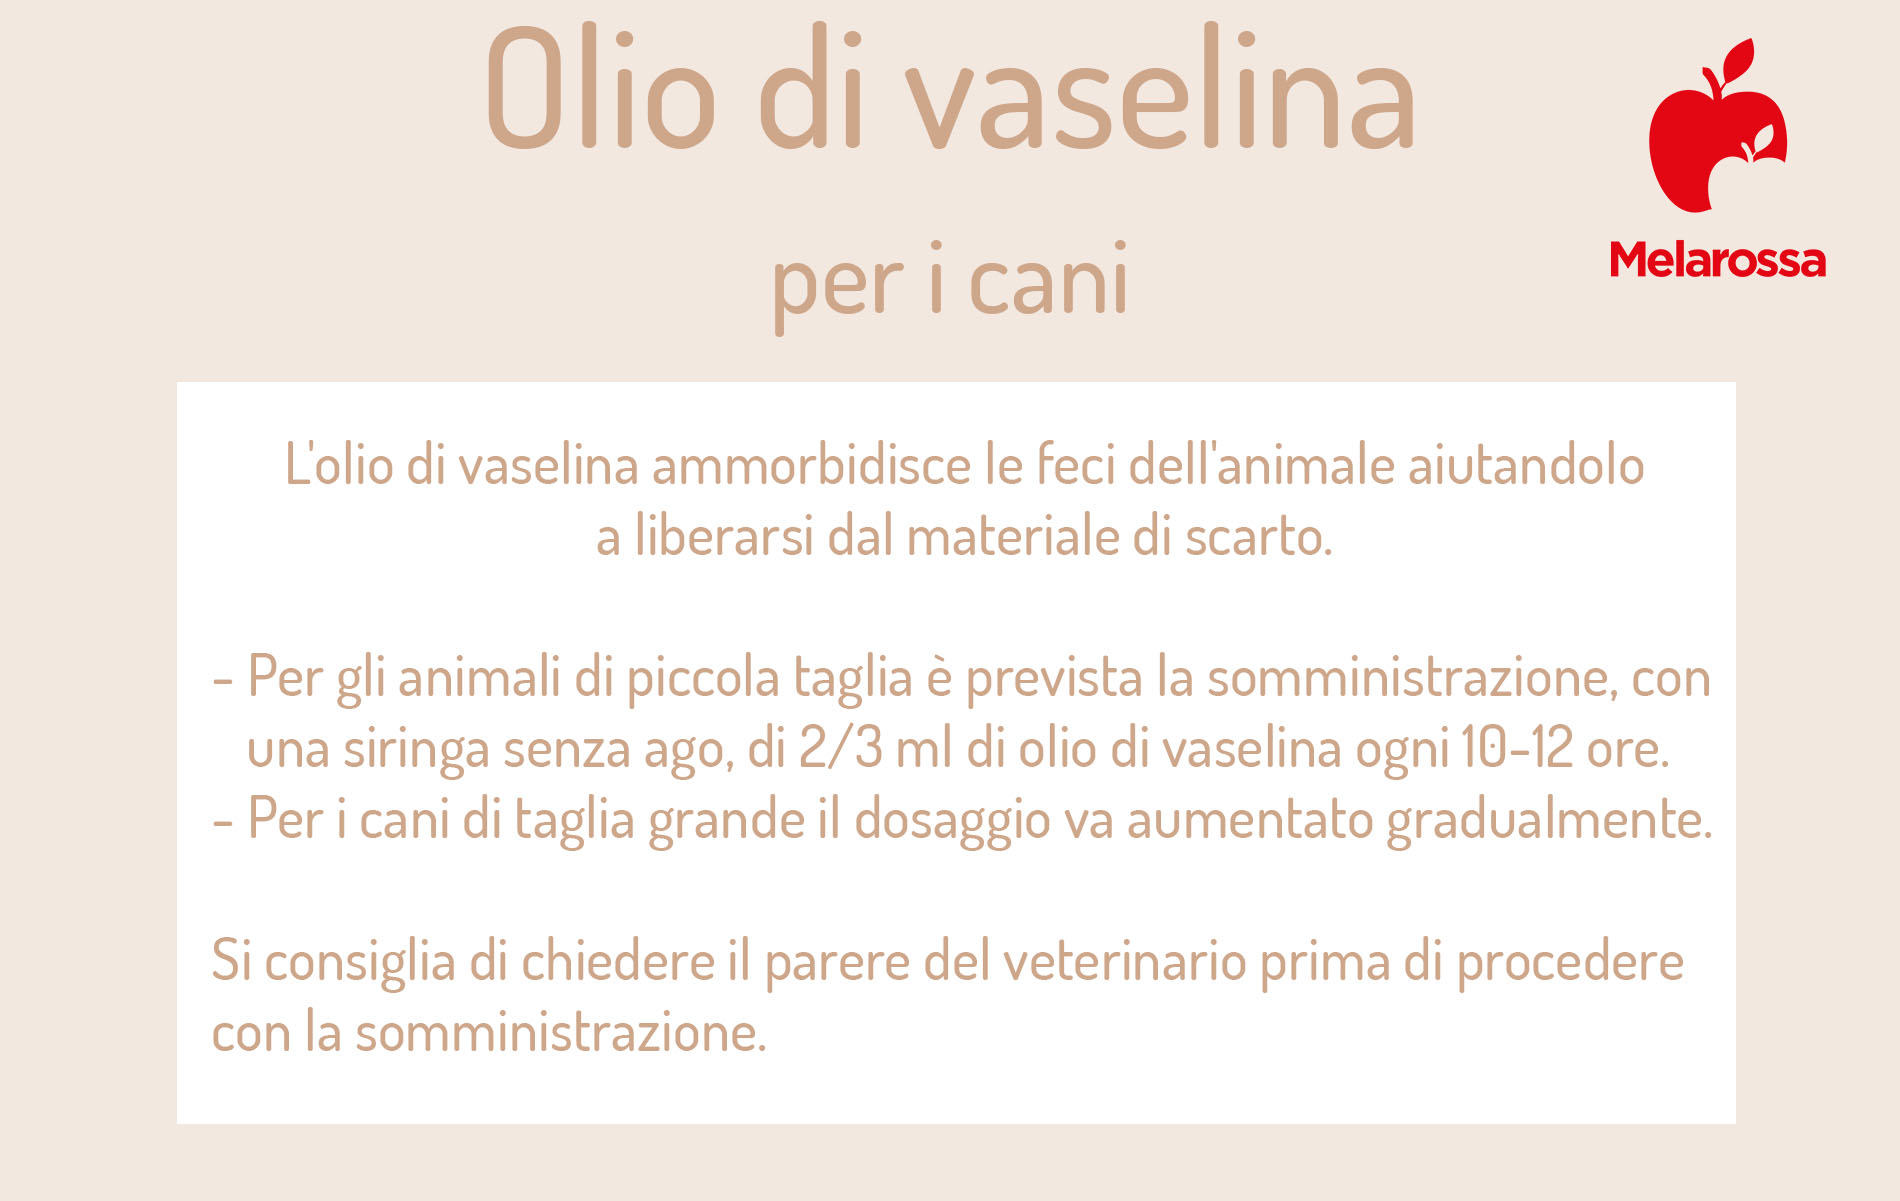 olio di vaselina per i cani